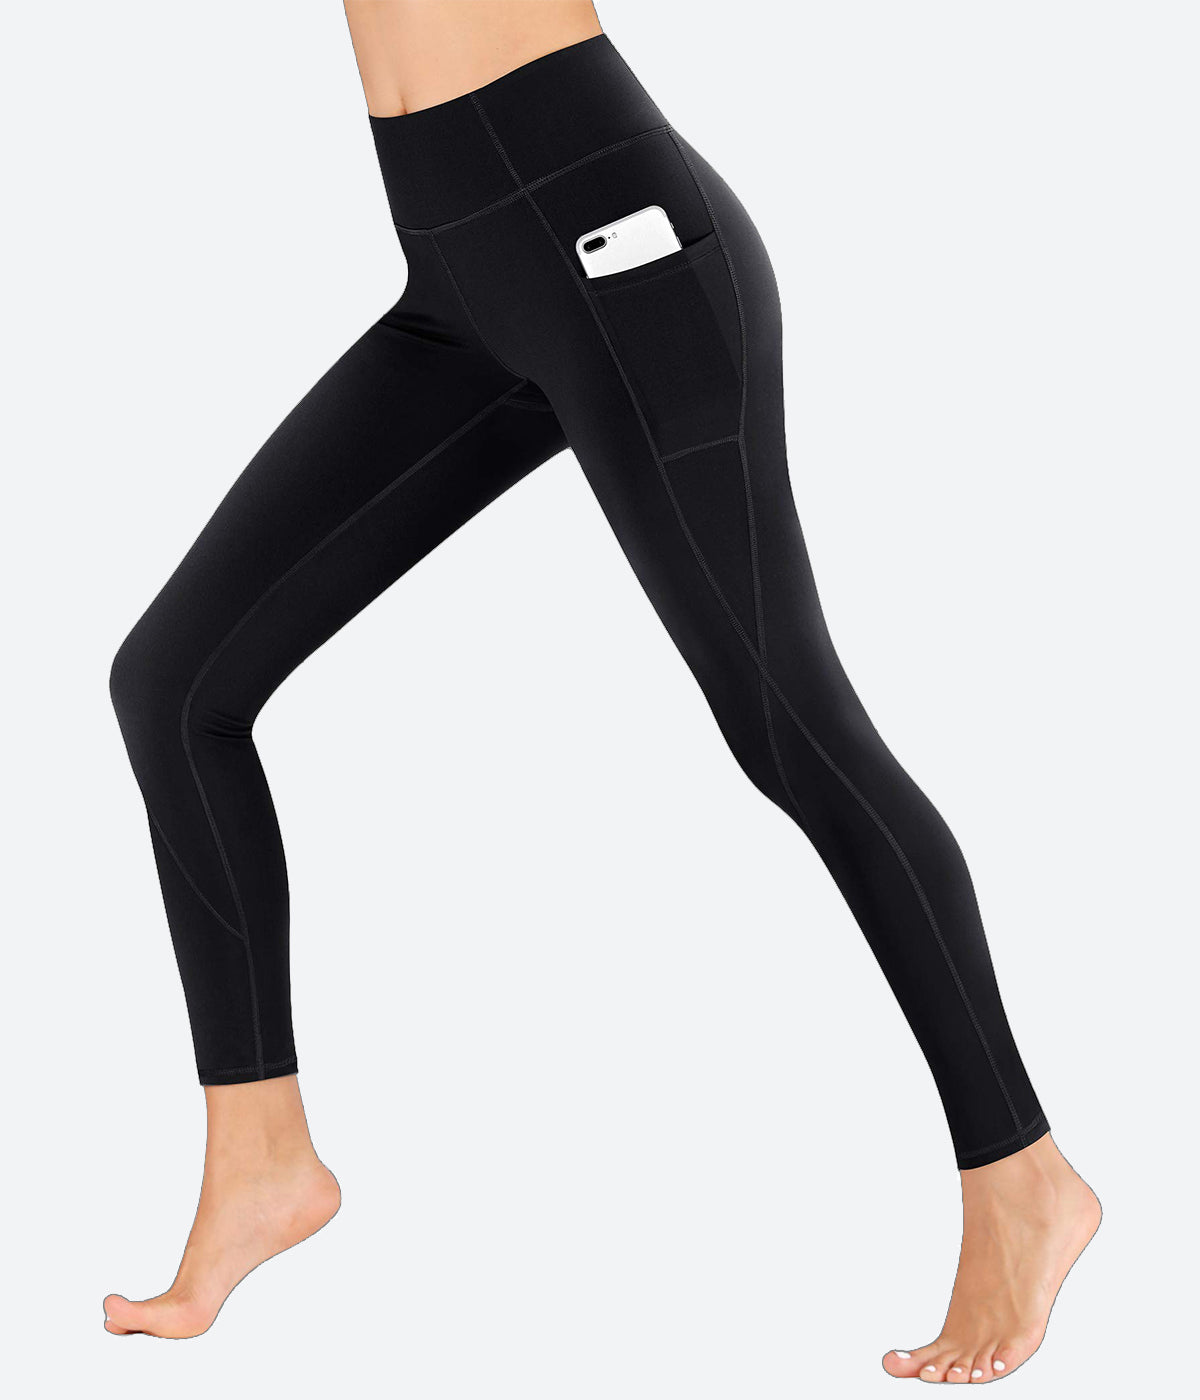 Buy Oalka Women's Yoga Capris Running Pants Workout Leggings Charcoal XL at